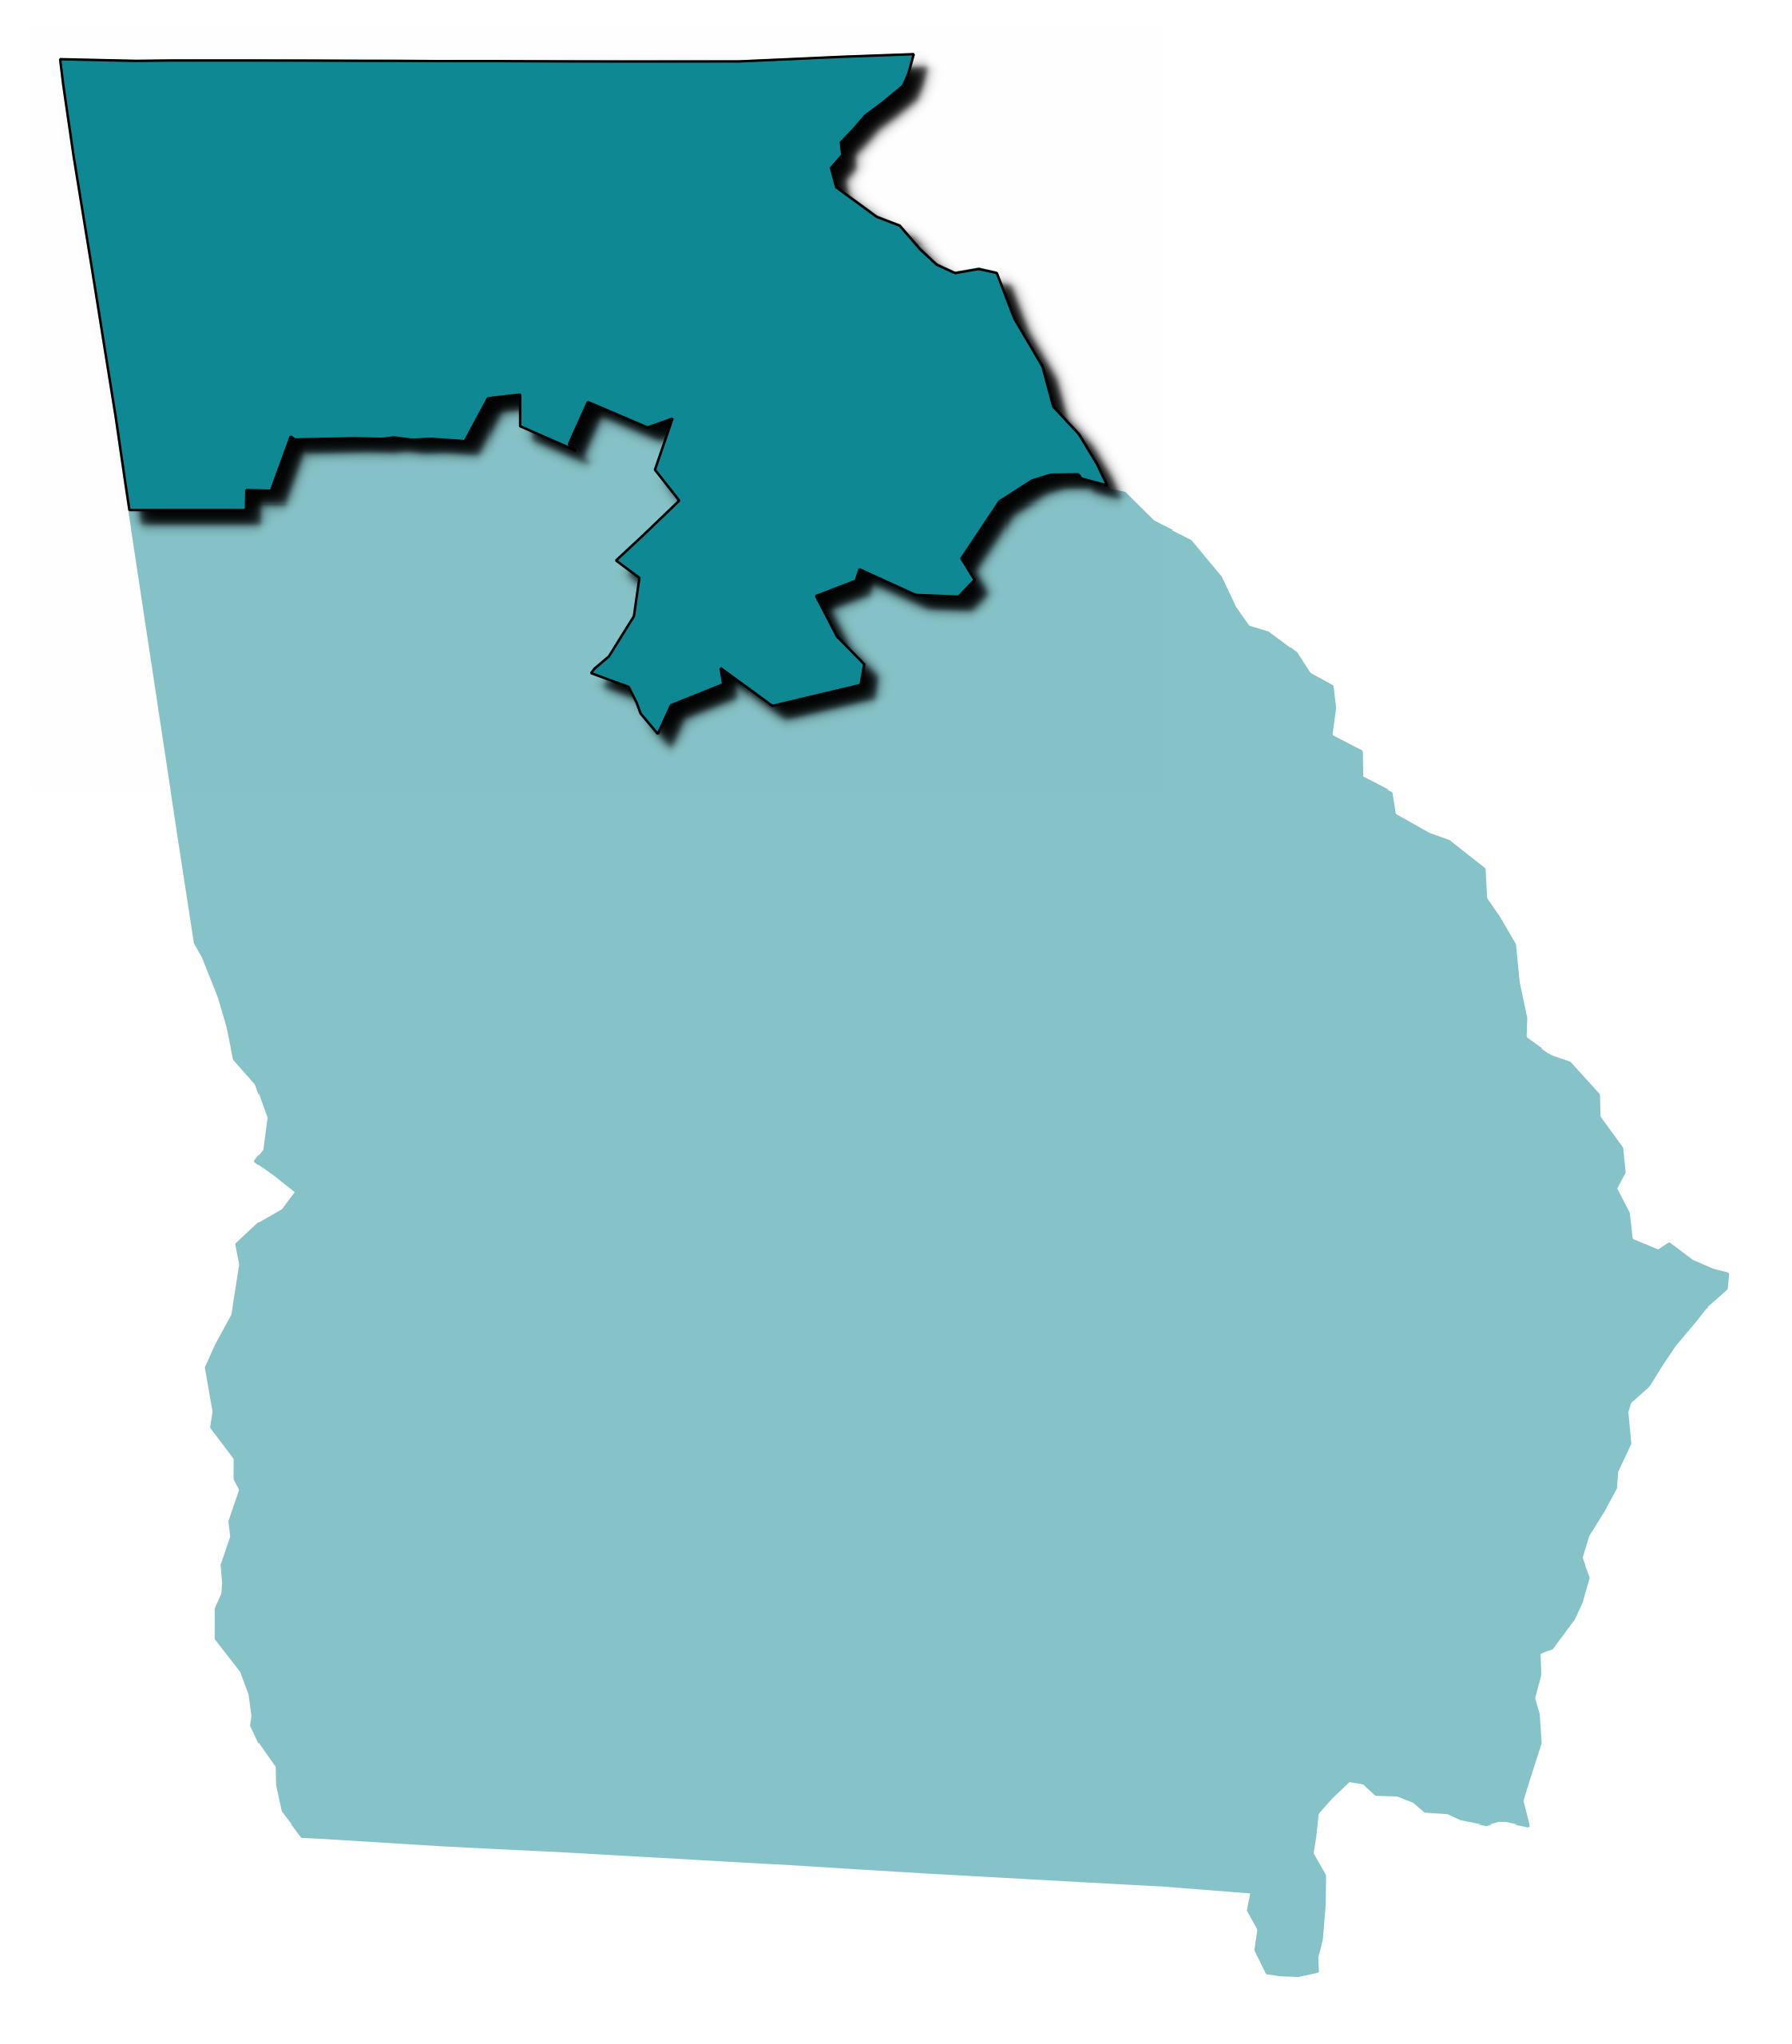 North Georgia region map